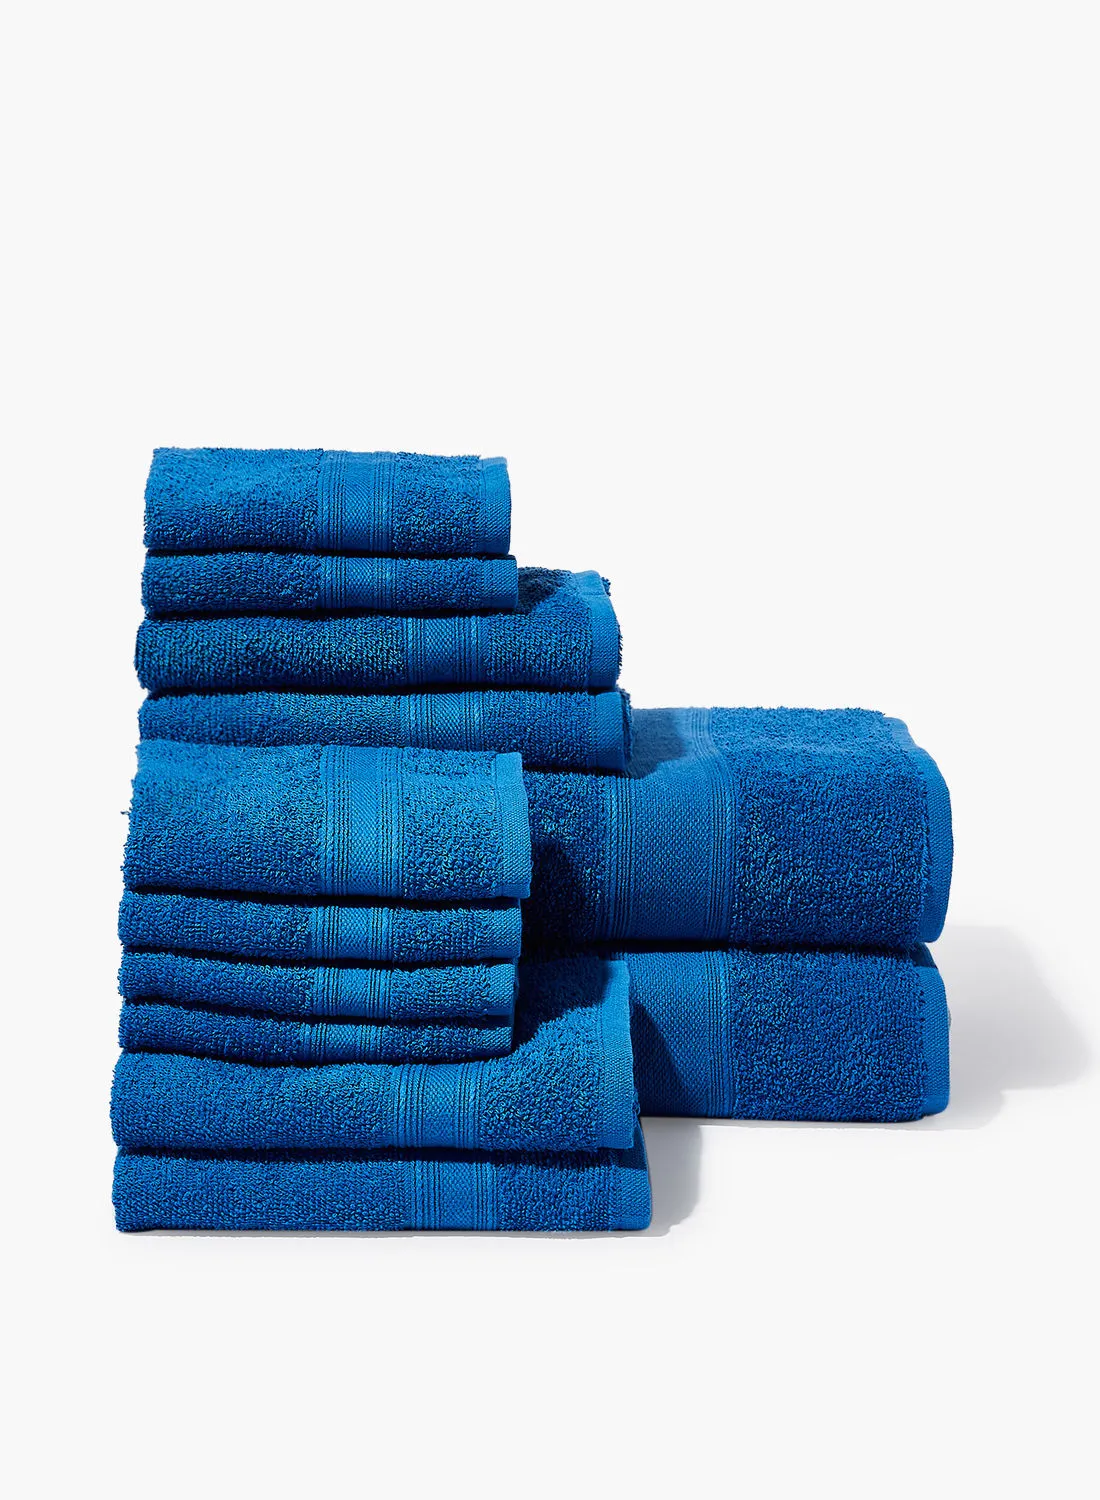 Amal 12 Piece Bathroom Towel Set - 400 GSM 100% Cotton Terry - 12 Face Towel - Blue Color -Quick Dry - Super Absorbent